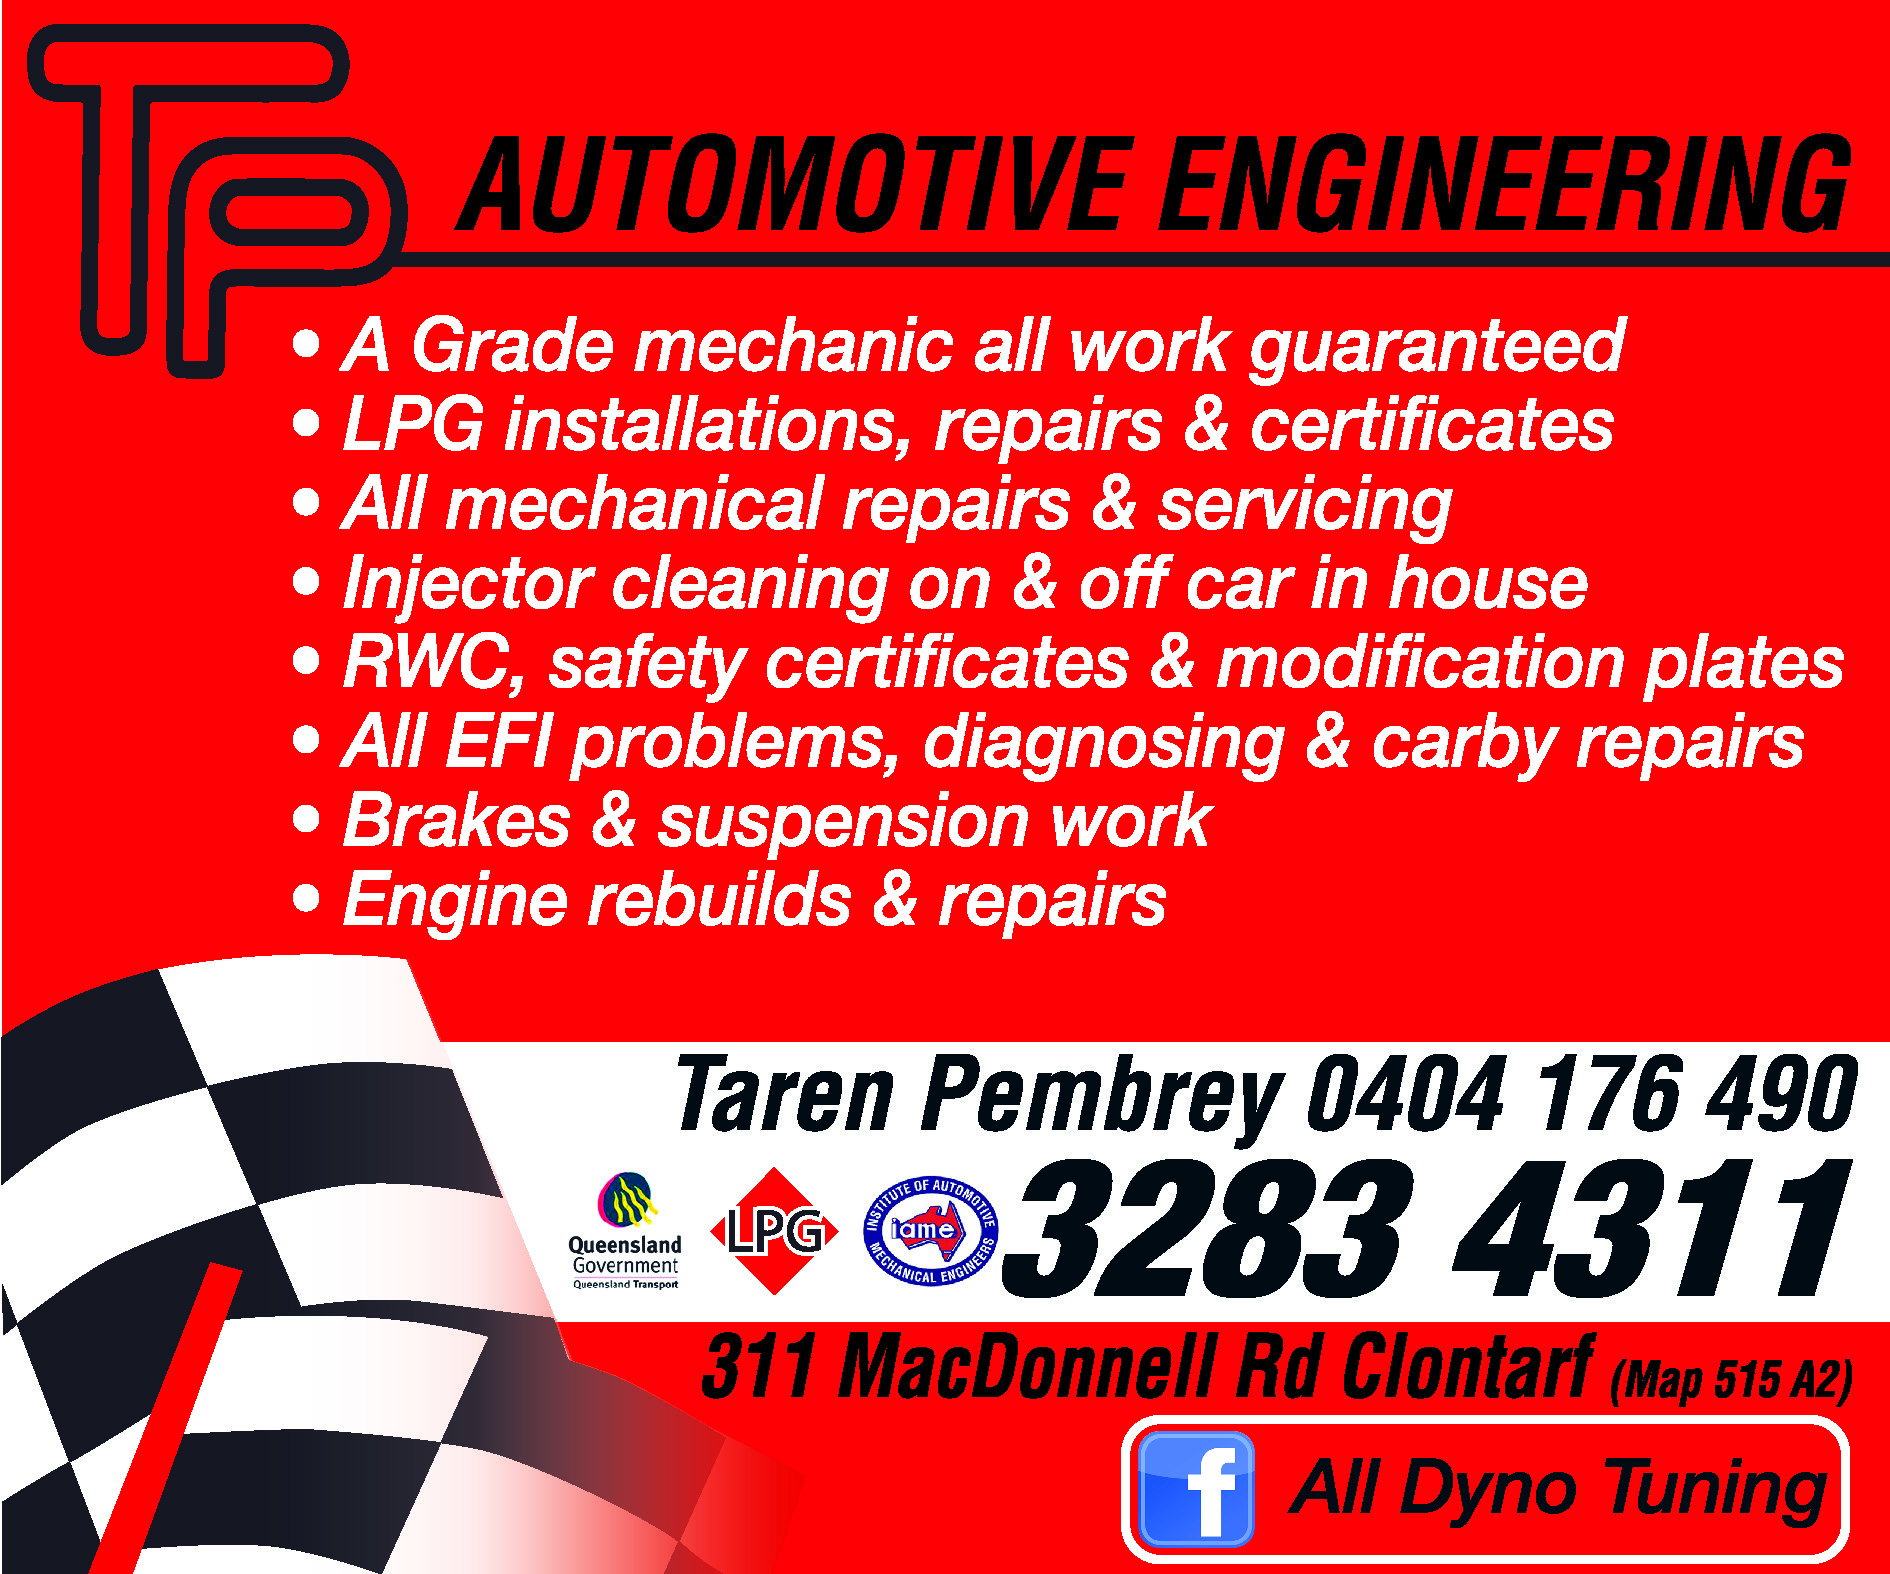 TP Automotive Engineering - Car Repair